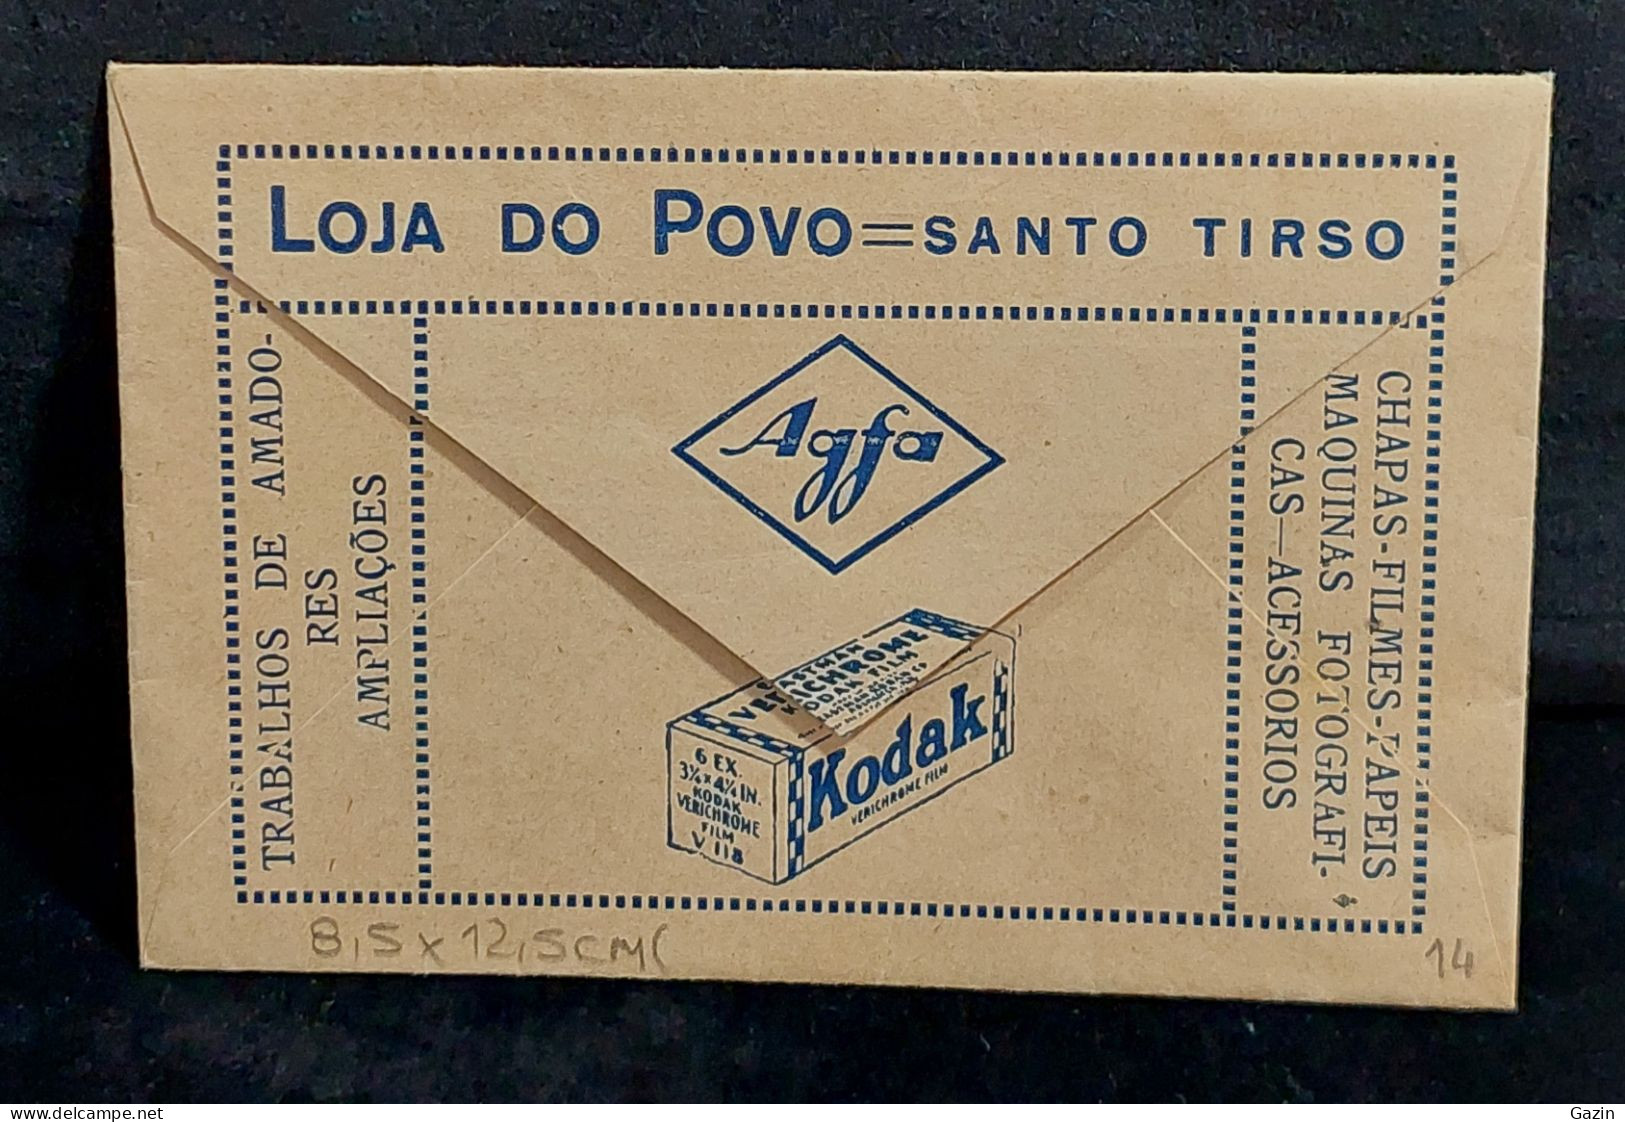 C6/6 - Envelope * Loja Do Povo * Santo Tirso * Agfa * Kodak * Photo  * Publicidade * Porto * Portugal - Portugal